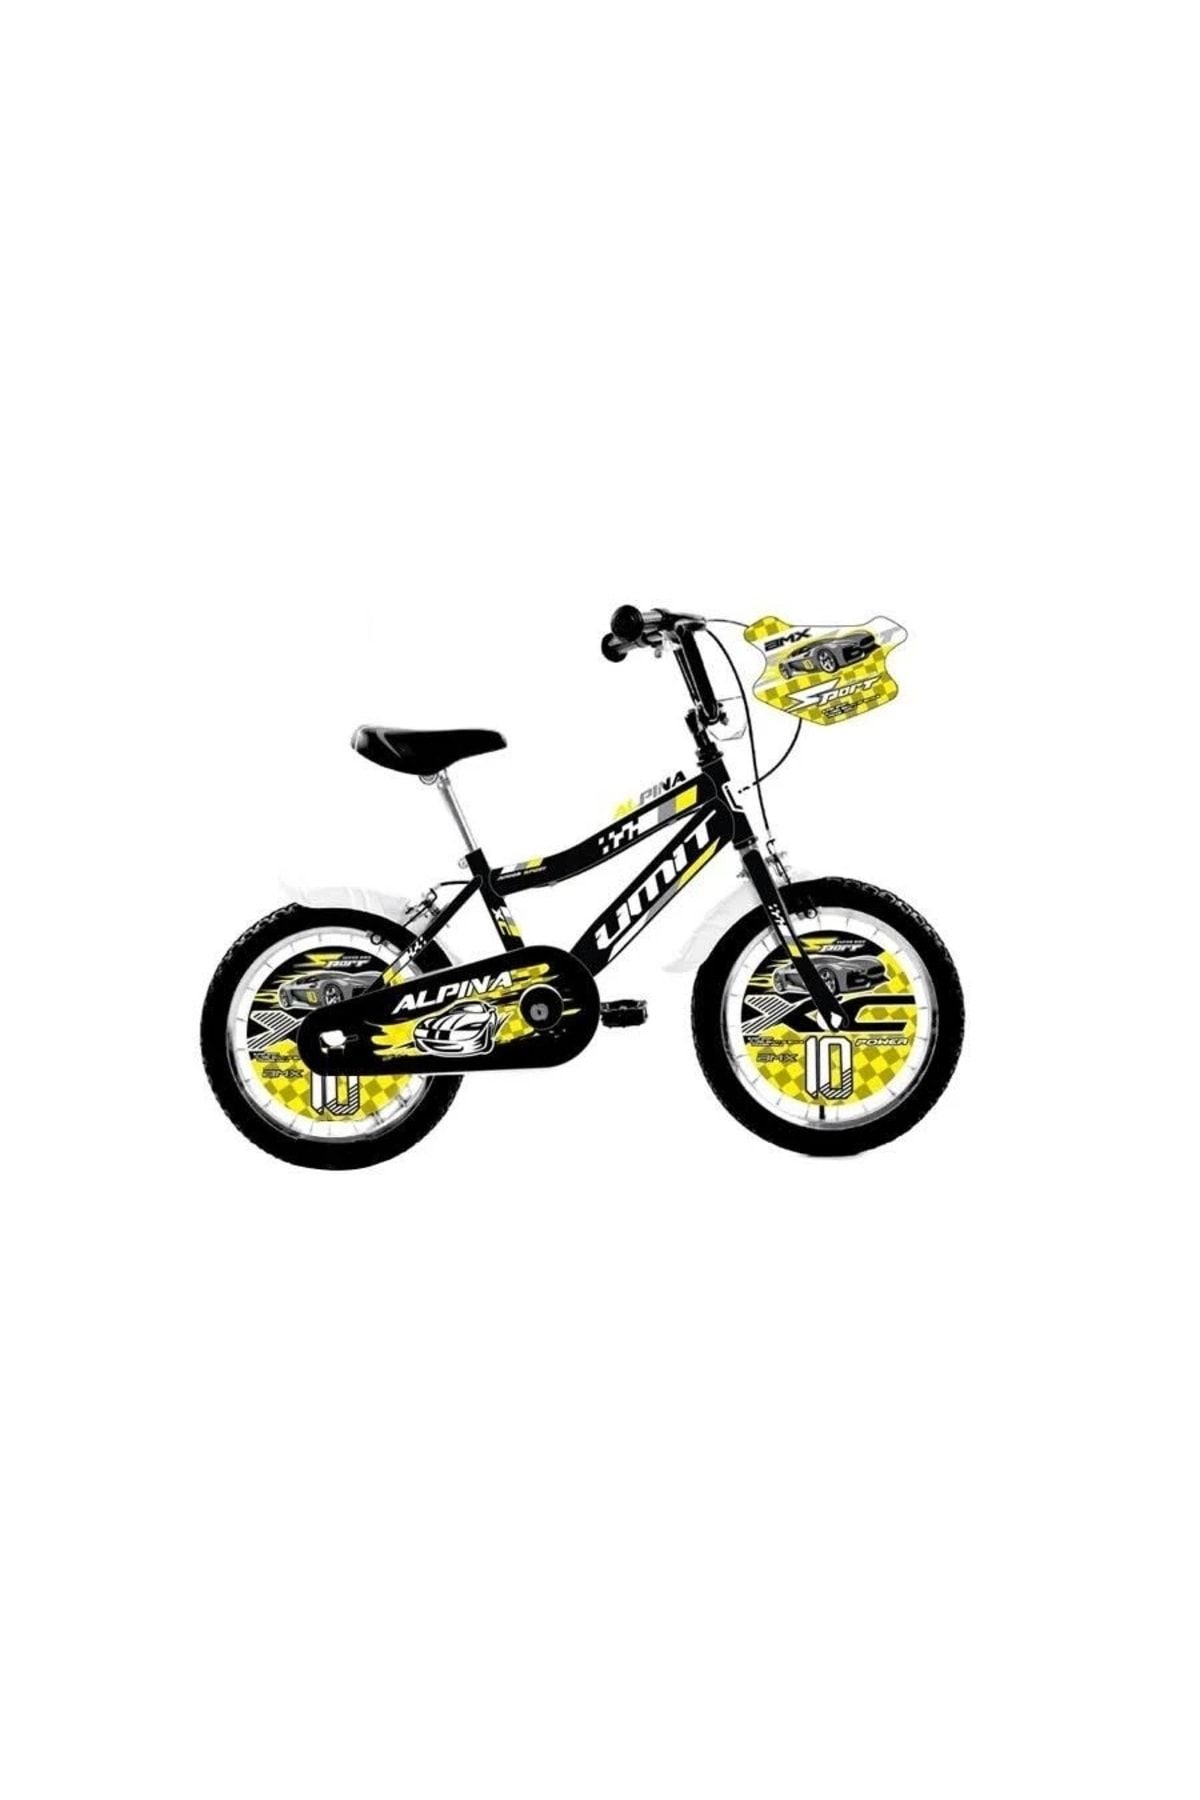 Ümit 2047 Alpına-m-bmx-v-erkek Çocuk Bisikleti 20 Jant Siyah Sarı-1000436867